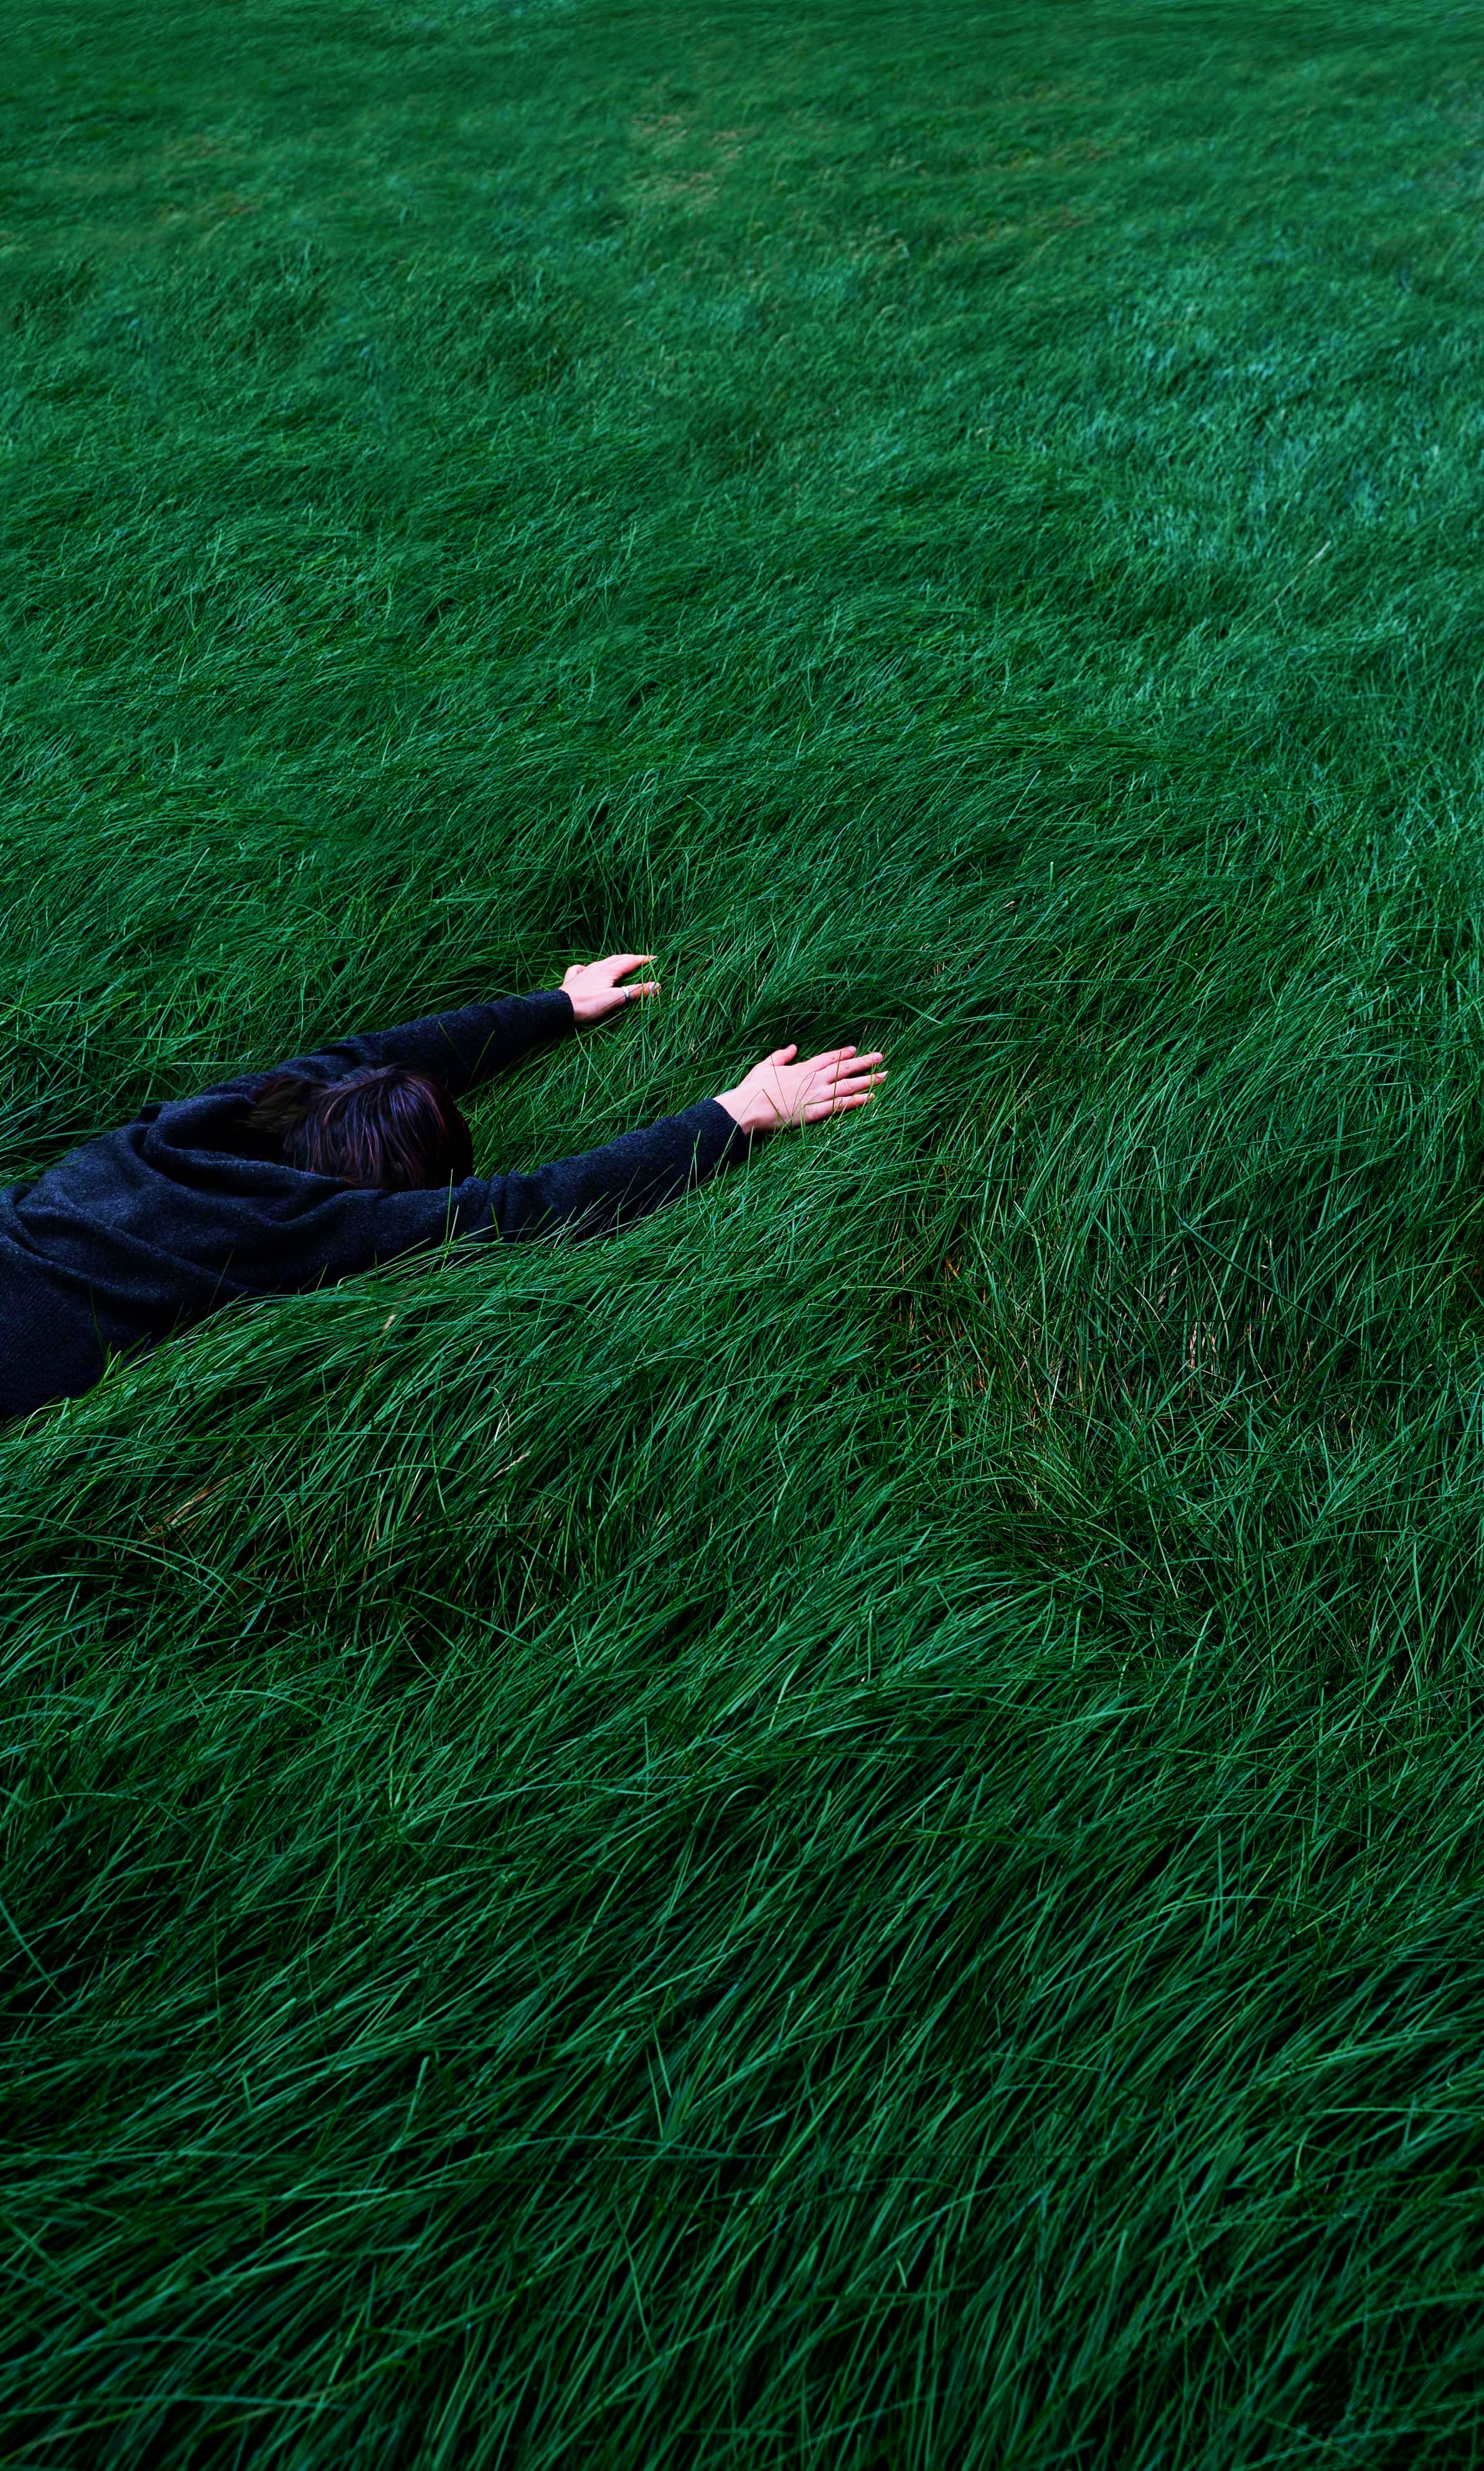 Überforderung – Person liegt bäuchlings in hohem grünen Gras